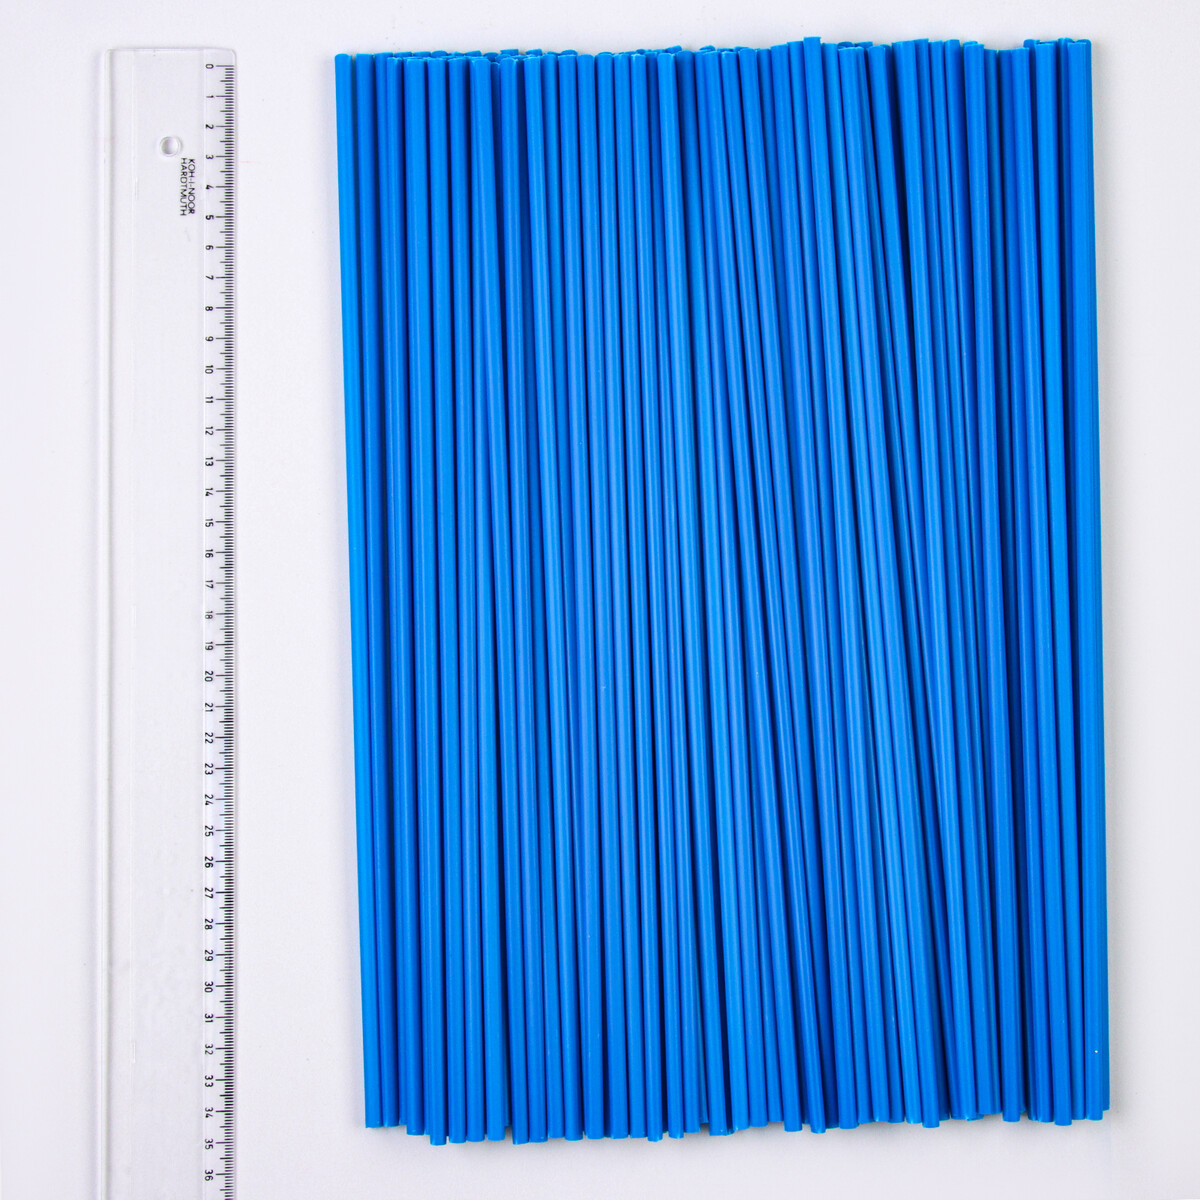 Трубочка для шаров и флагштоков, d=5 мм, цвет синий, набор 100 шт.